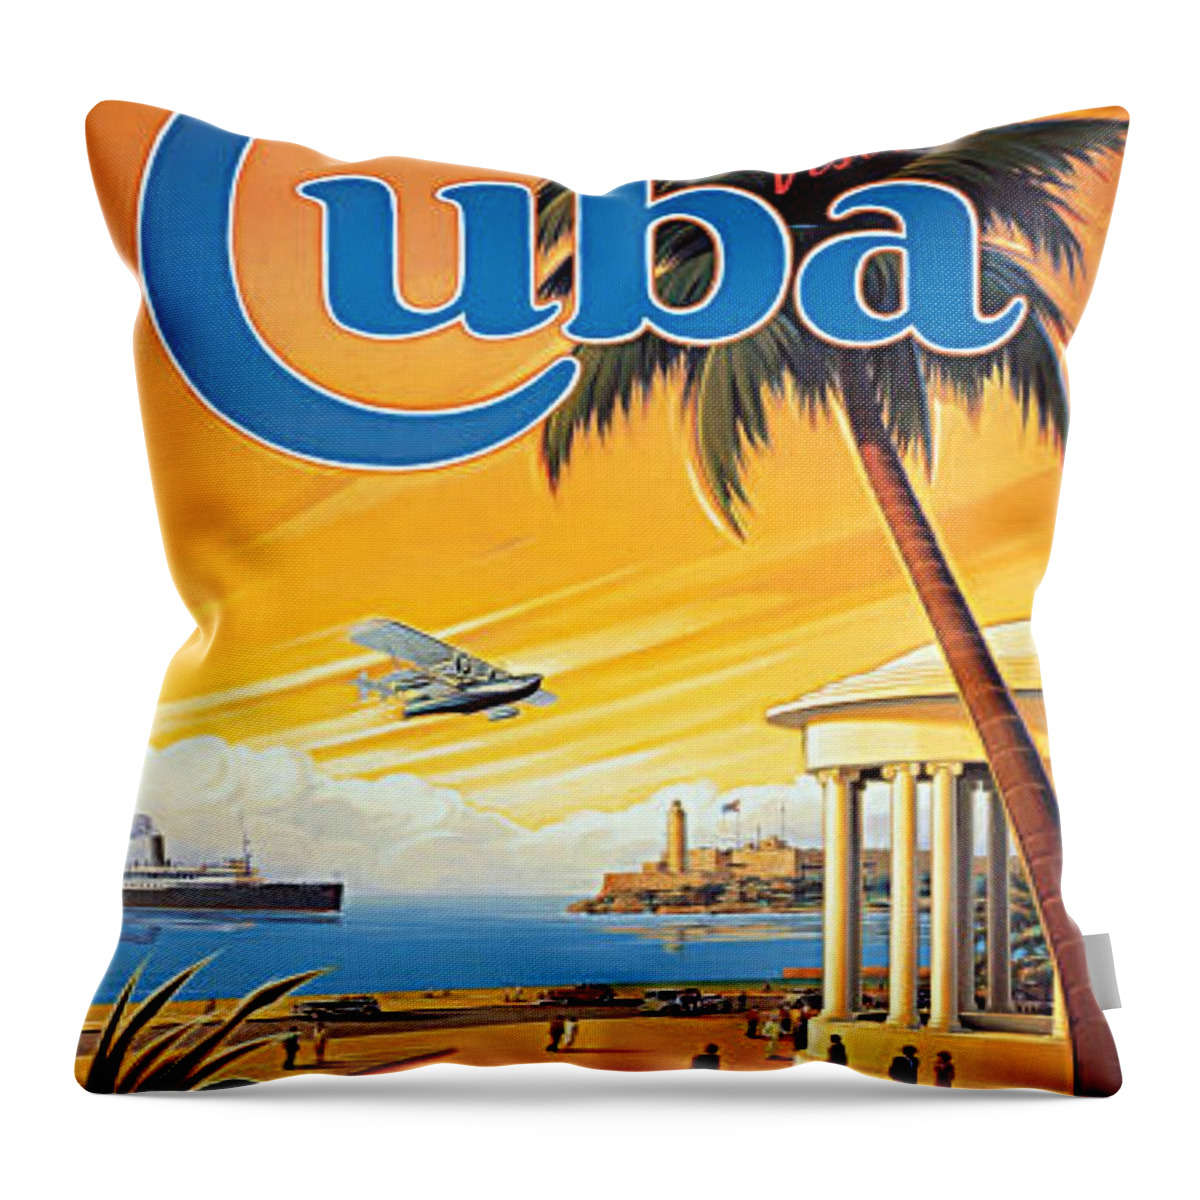 Travel Throw Pillow featuring the digital art Pan Am Cuba by John Madison